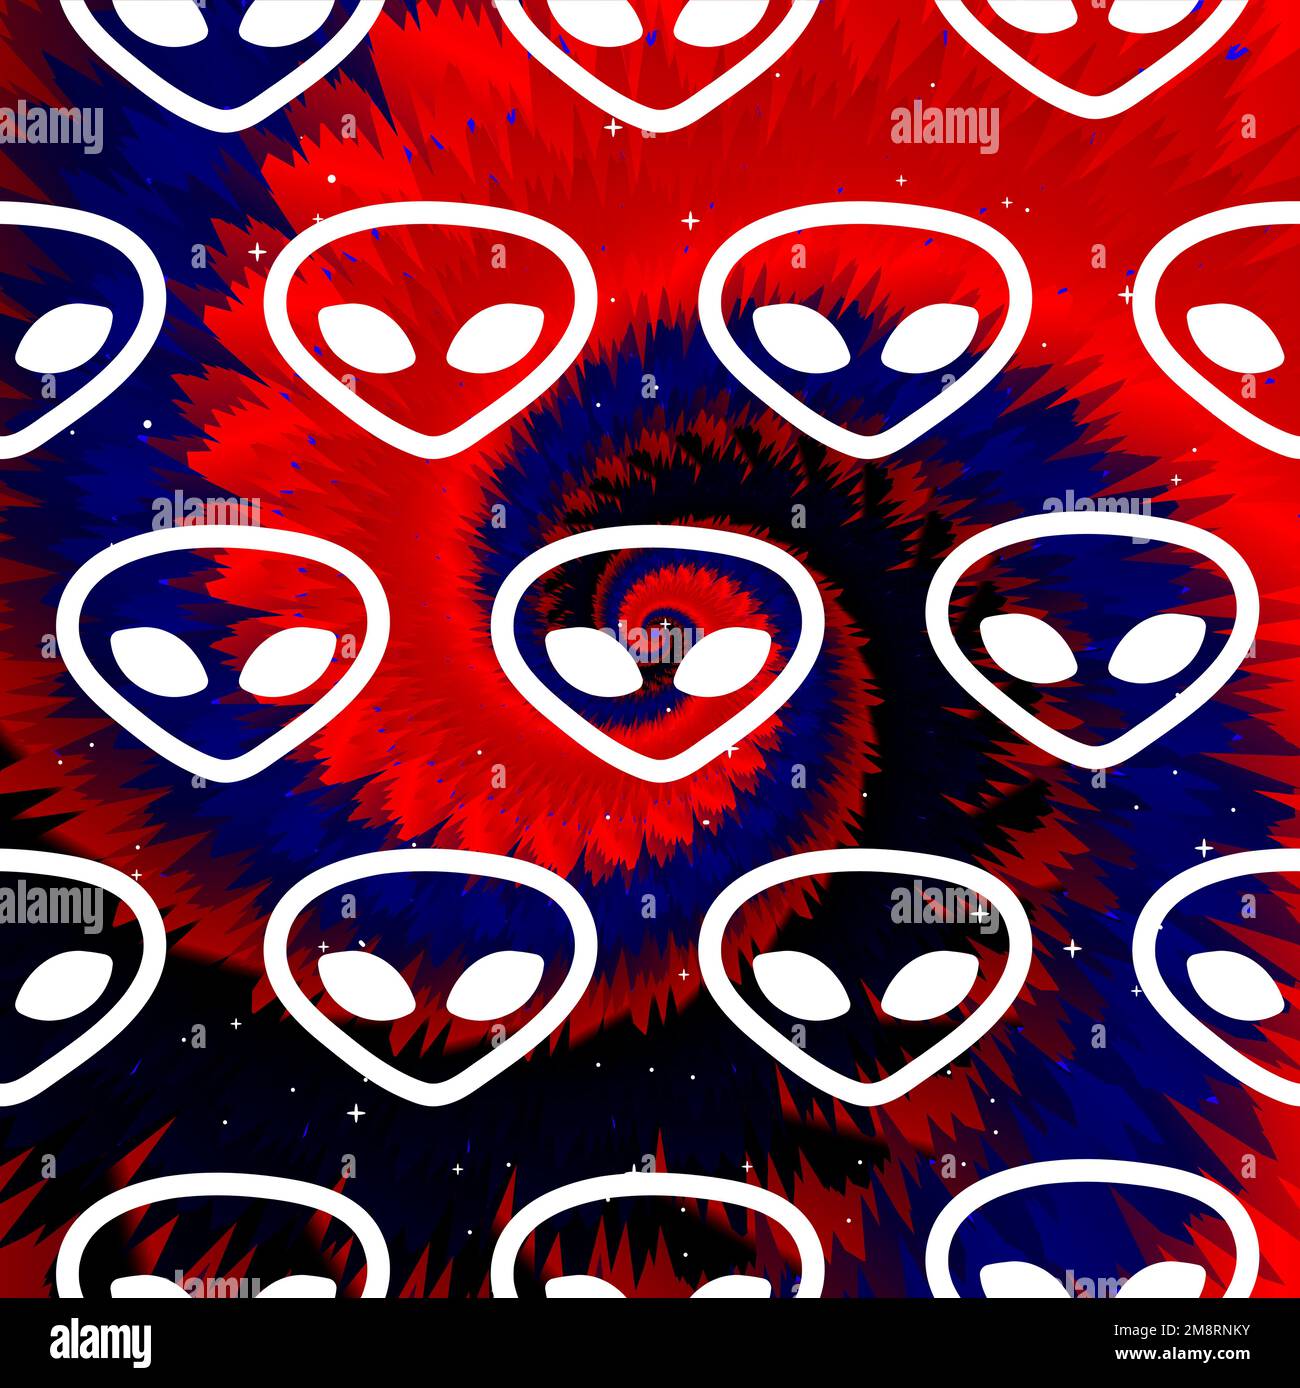 Alien faces,tie dye background.Vector tie dye crazy cartoon character illustration.Ufo,alien,tiedye background,pattern,wallpaper print concept Stock Vector